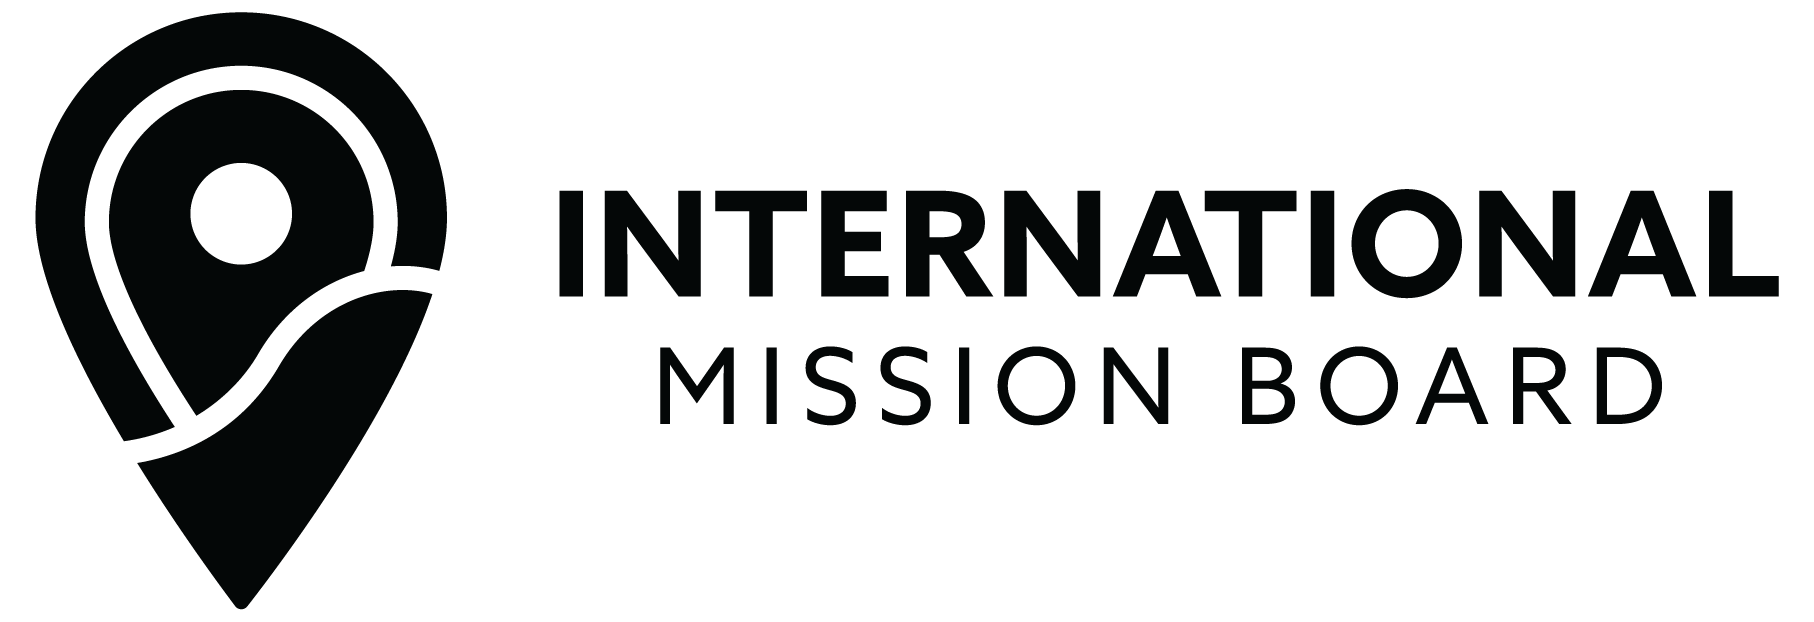 IMB Logo Wordmark Horizontal Black